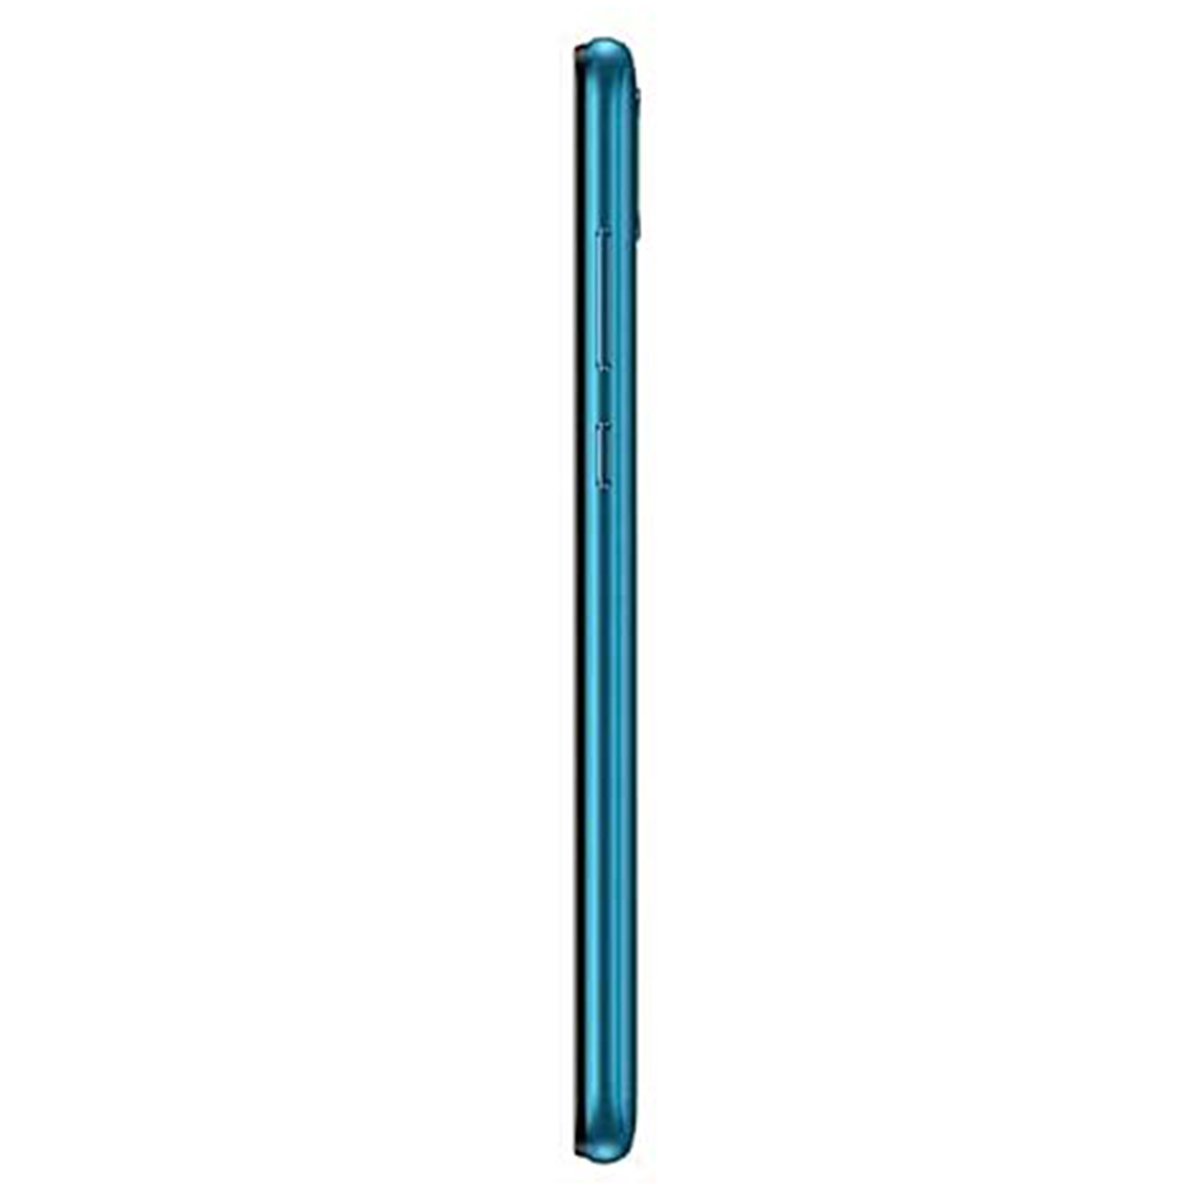 Huawei Y5-2019 32GB Sapphire Blue